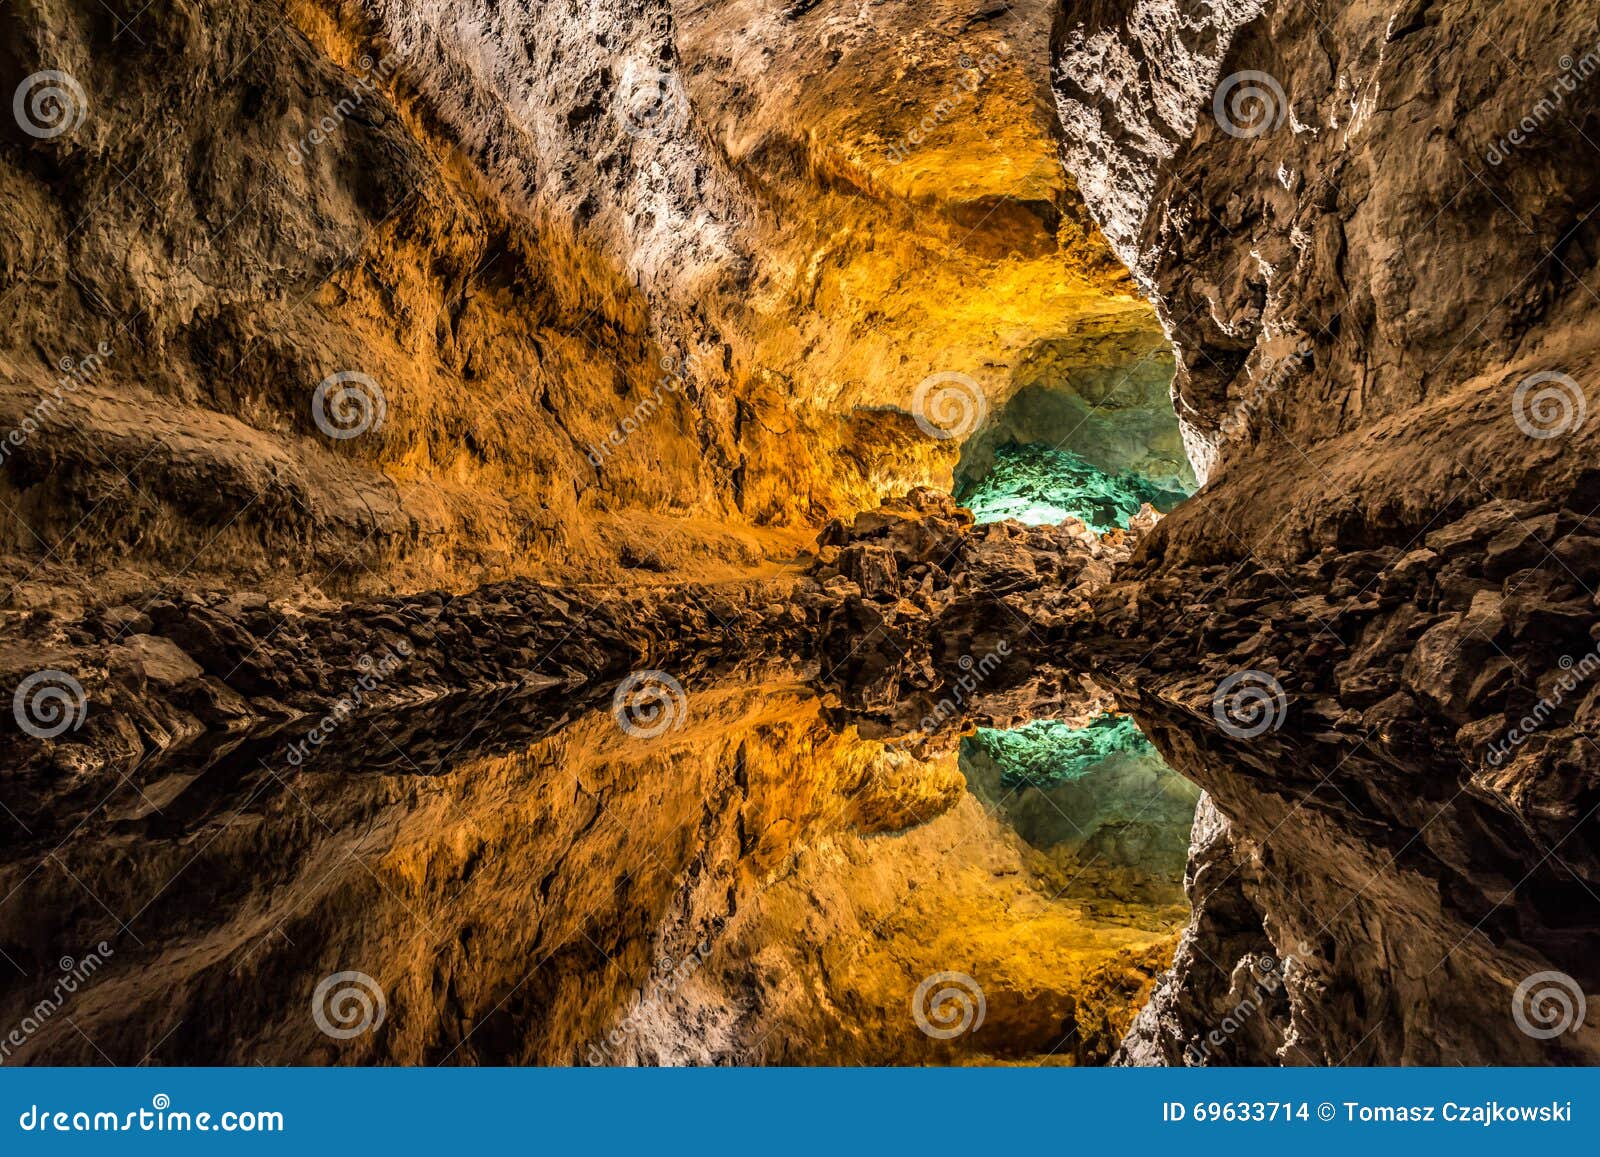 optical illusion in cueva de los verdes, an amazing lava tube and tourist attraction on lanzarote island